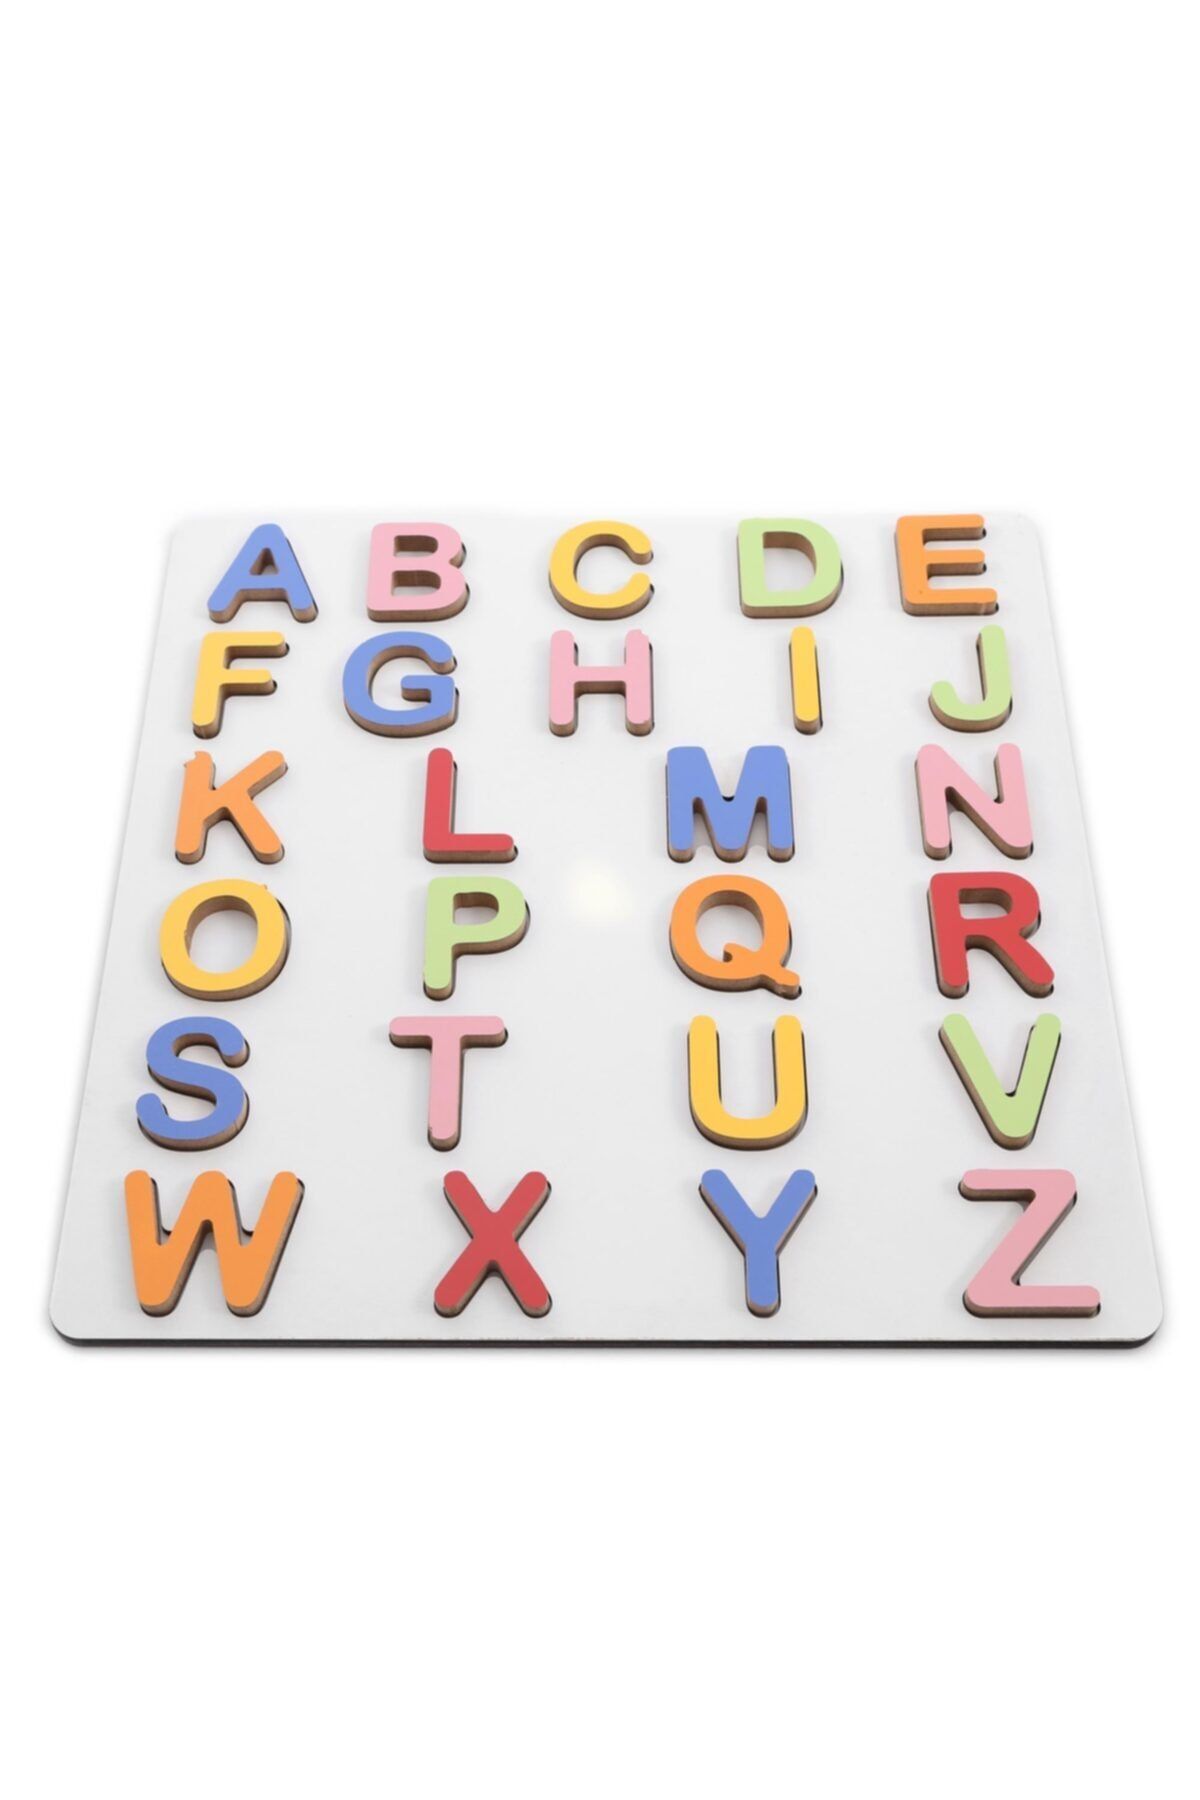 Mashotrend Ahşap Harf Öğretici Puzzle - Kelimeler Puzzle - Renkli Eğitici Ahşap Oyuncak